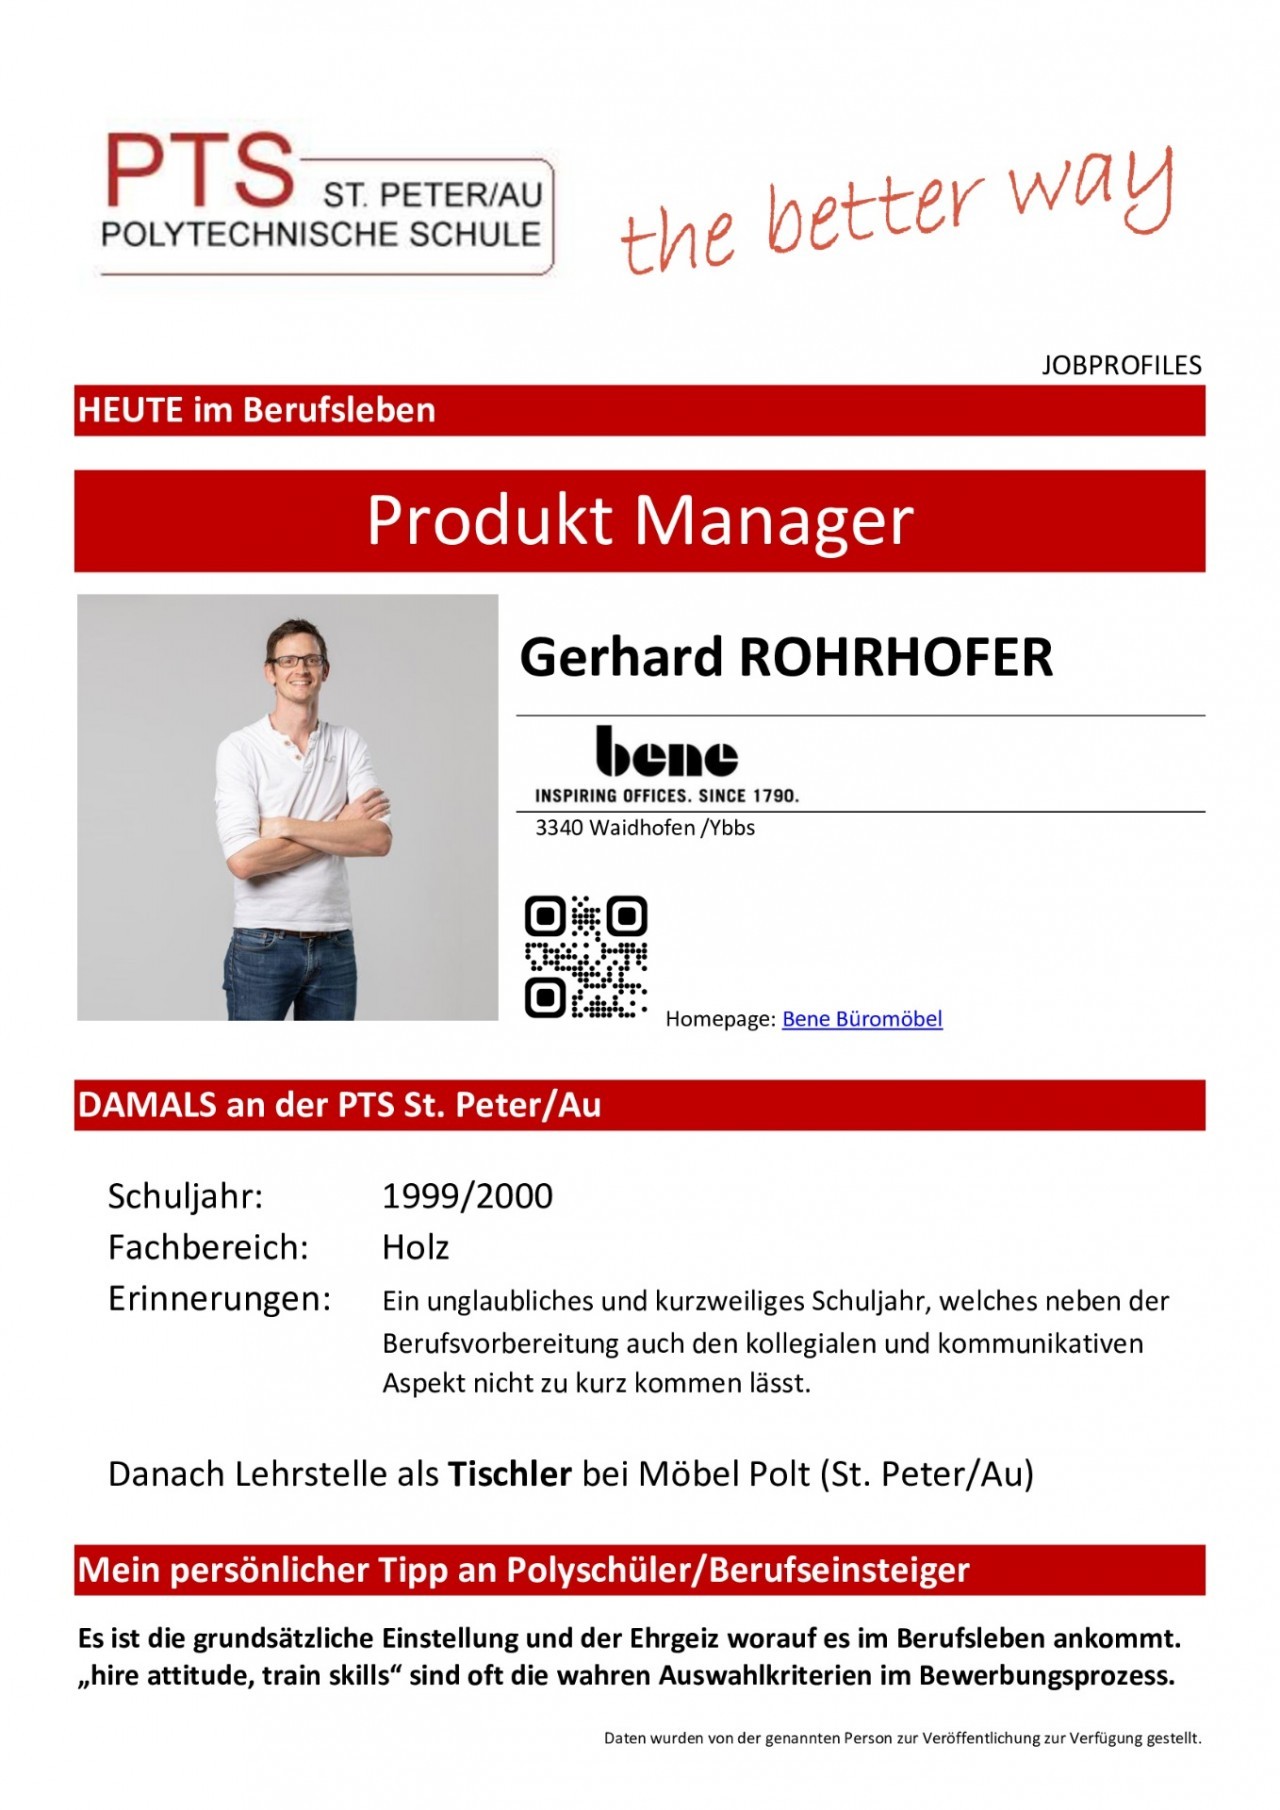 jobprofiles-ausgefuellt-gerhard-rohrhofer-pdf.jpg